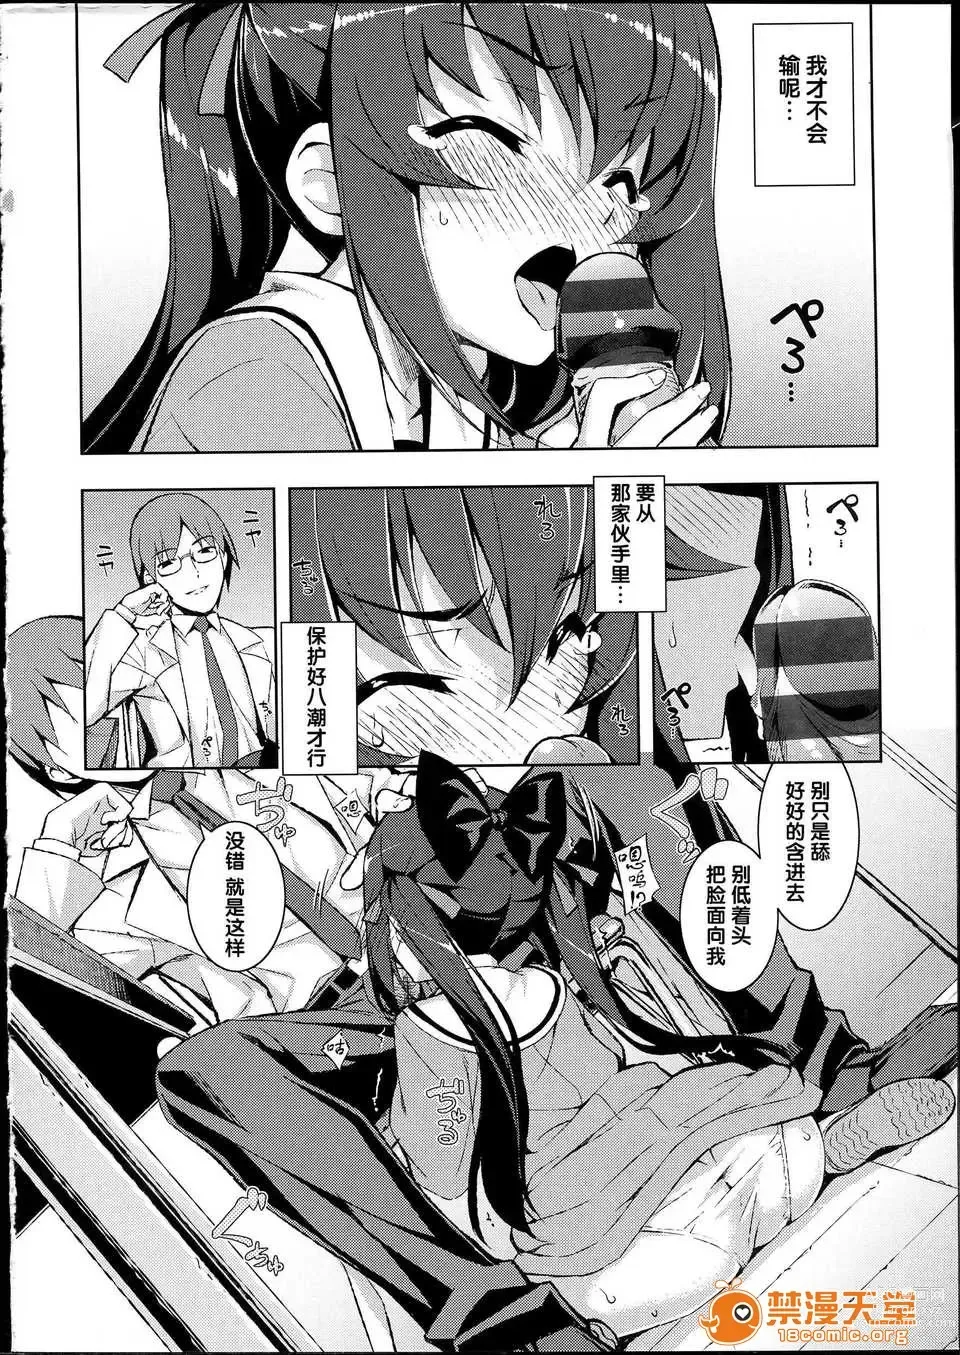 Page 8 of manga NTR2